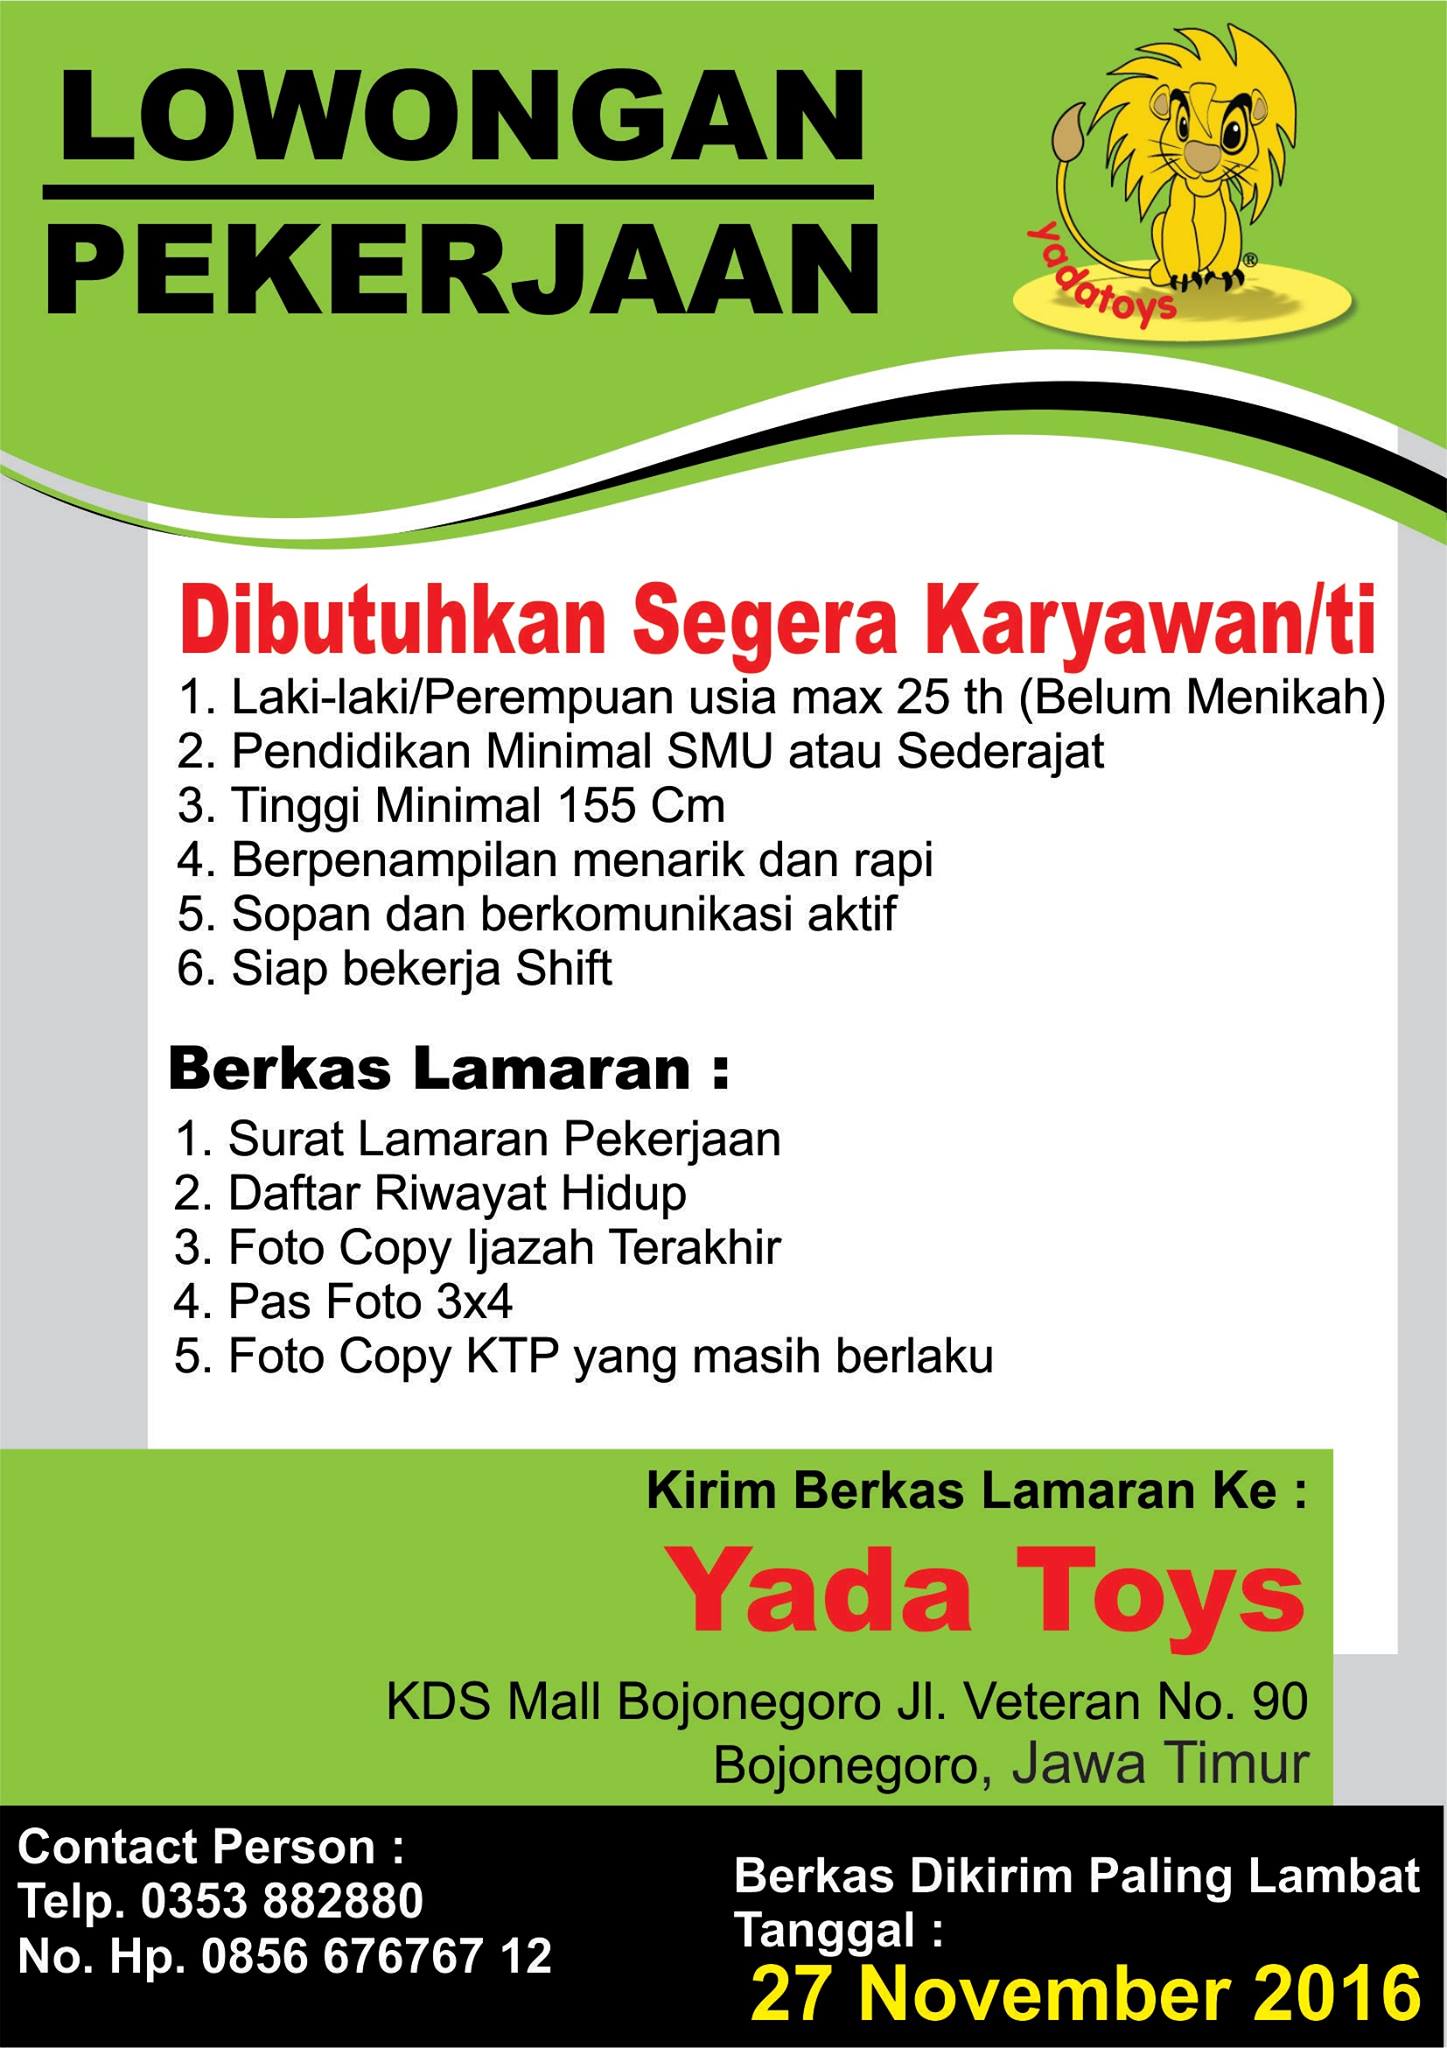 yada-toys-kds-mall-bojonegoro